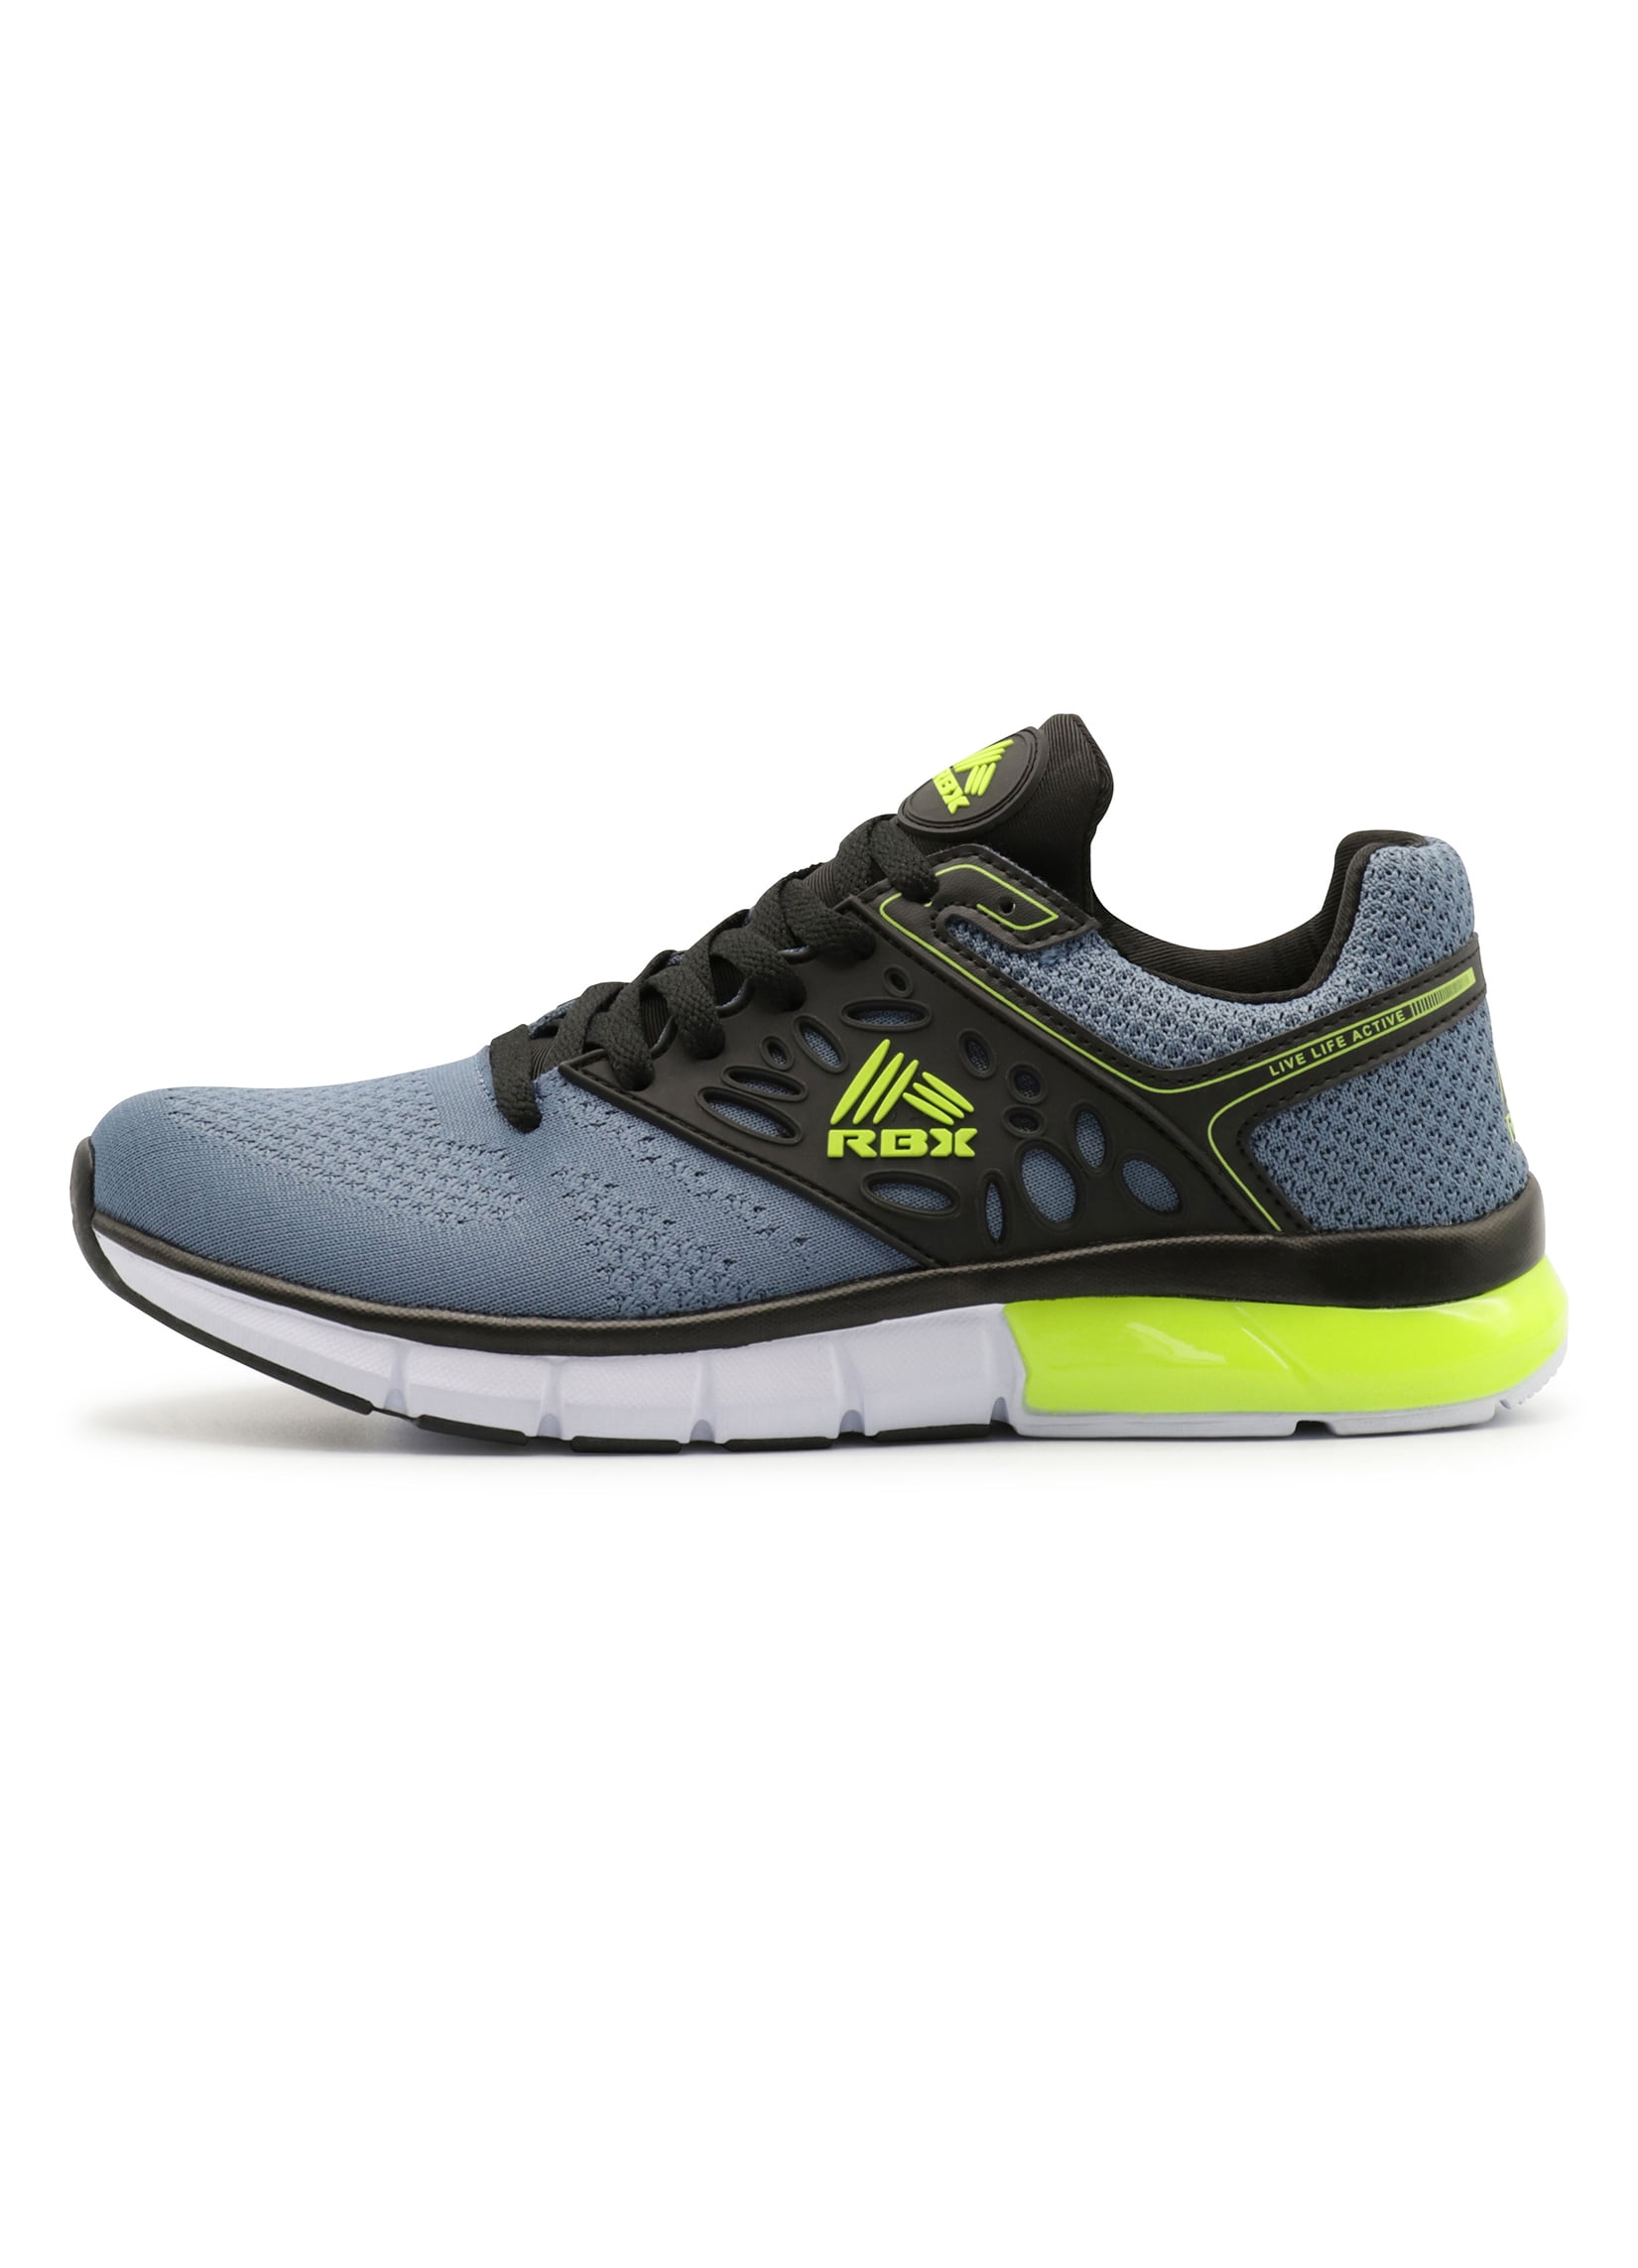 Apex Running Shoes, Men's Shoes,Active Shoes, Tennis Shoes Size 7 | eBay